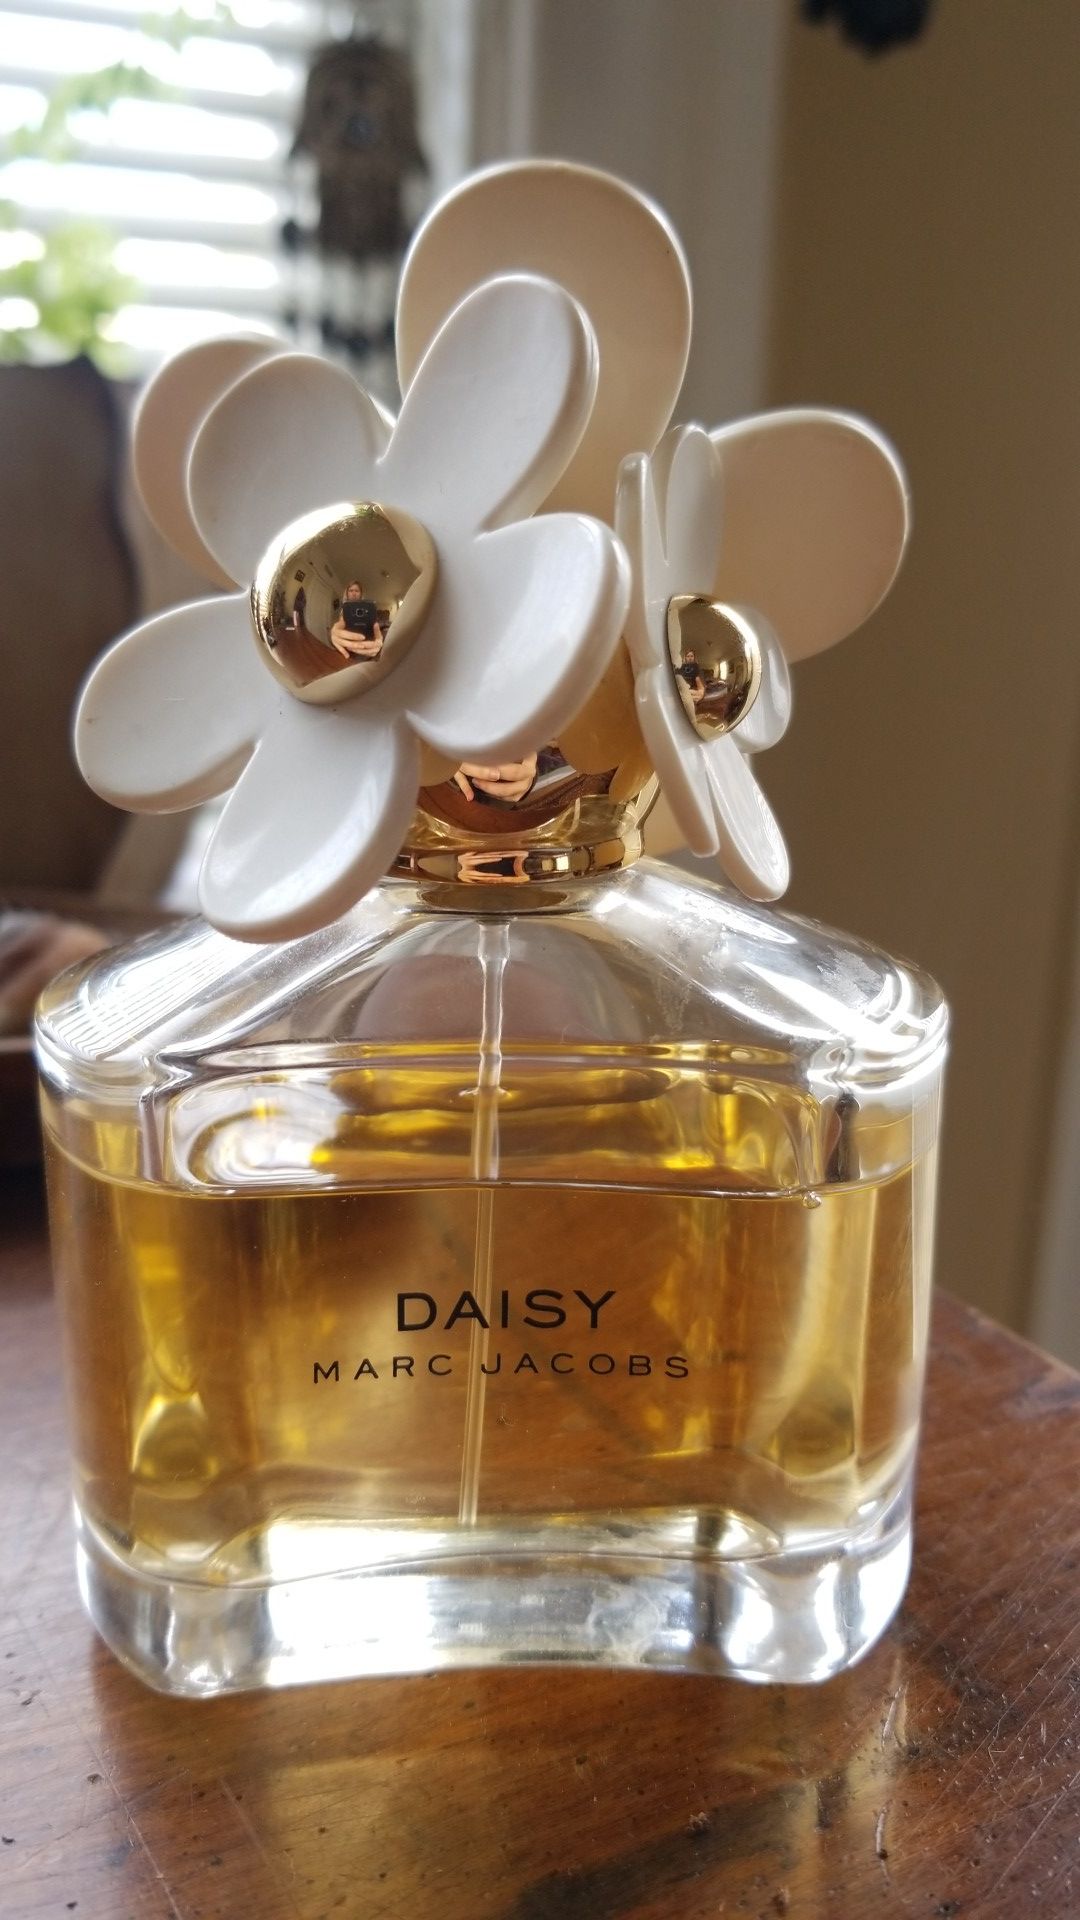 Daisy Marc Jacob's Perfume